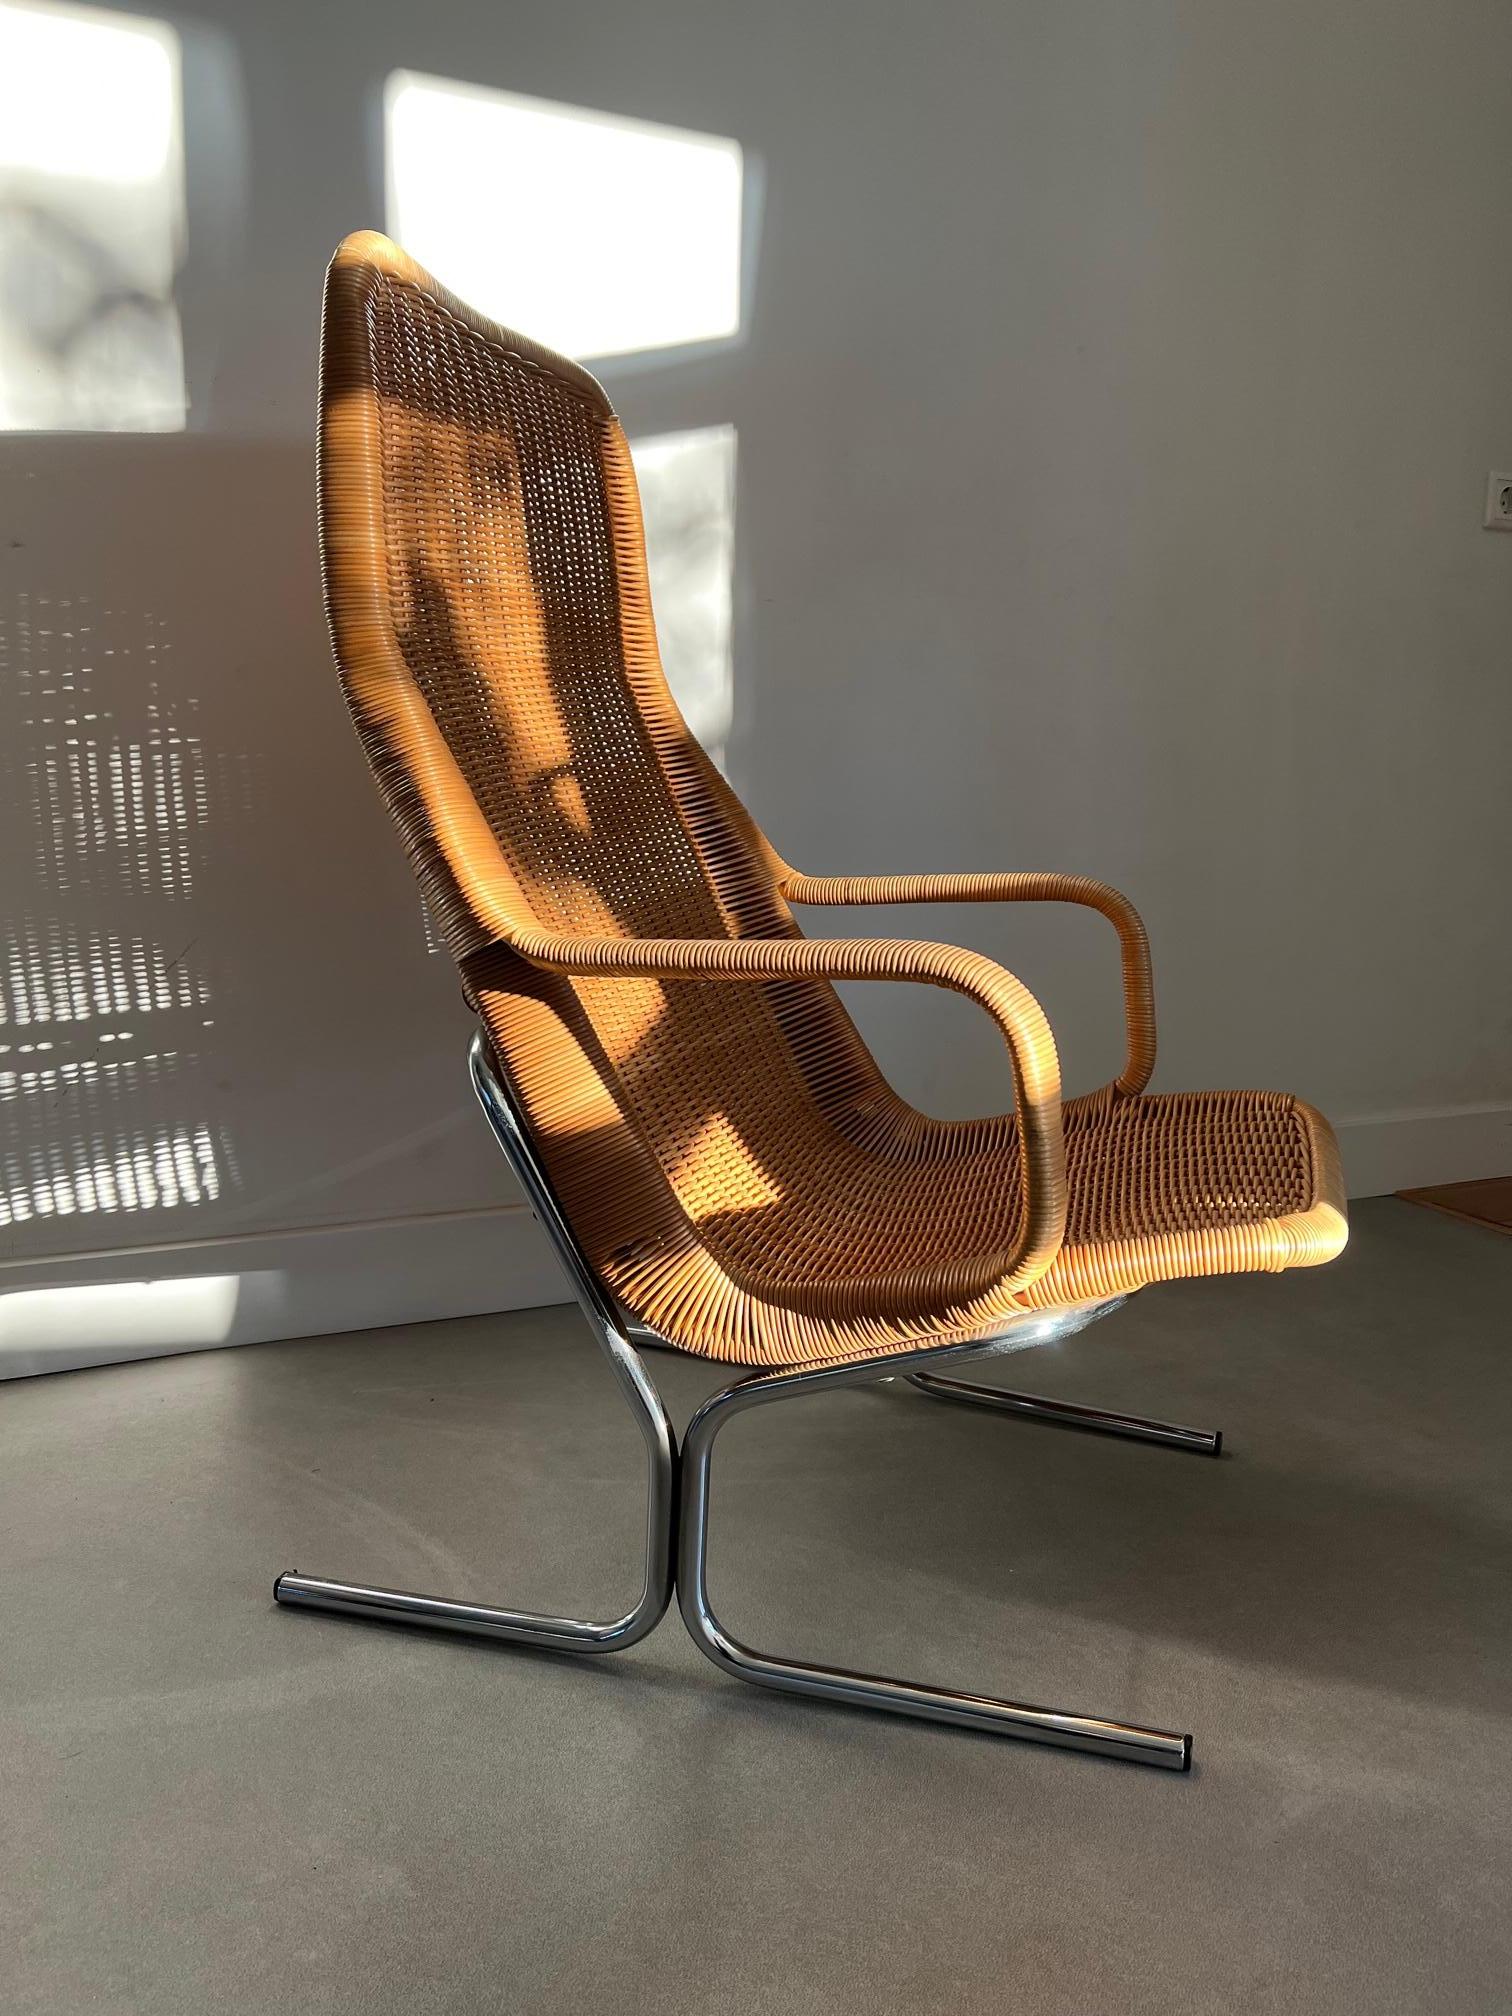 Dutch Vintage Rattan Lounge Chair by Dirk Van Sliedrecht 60s Model 514